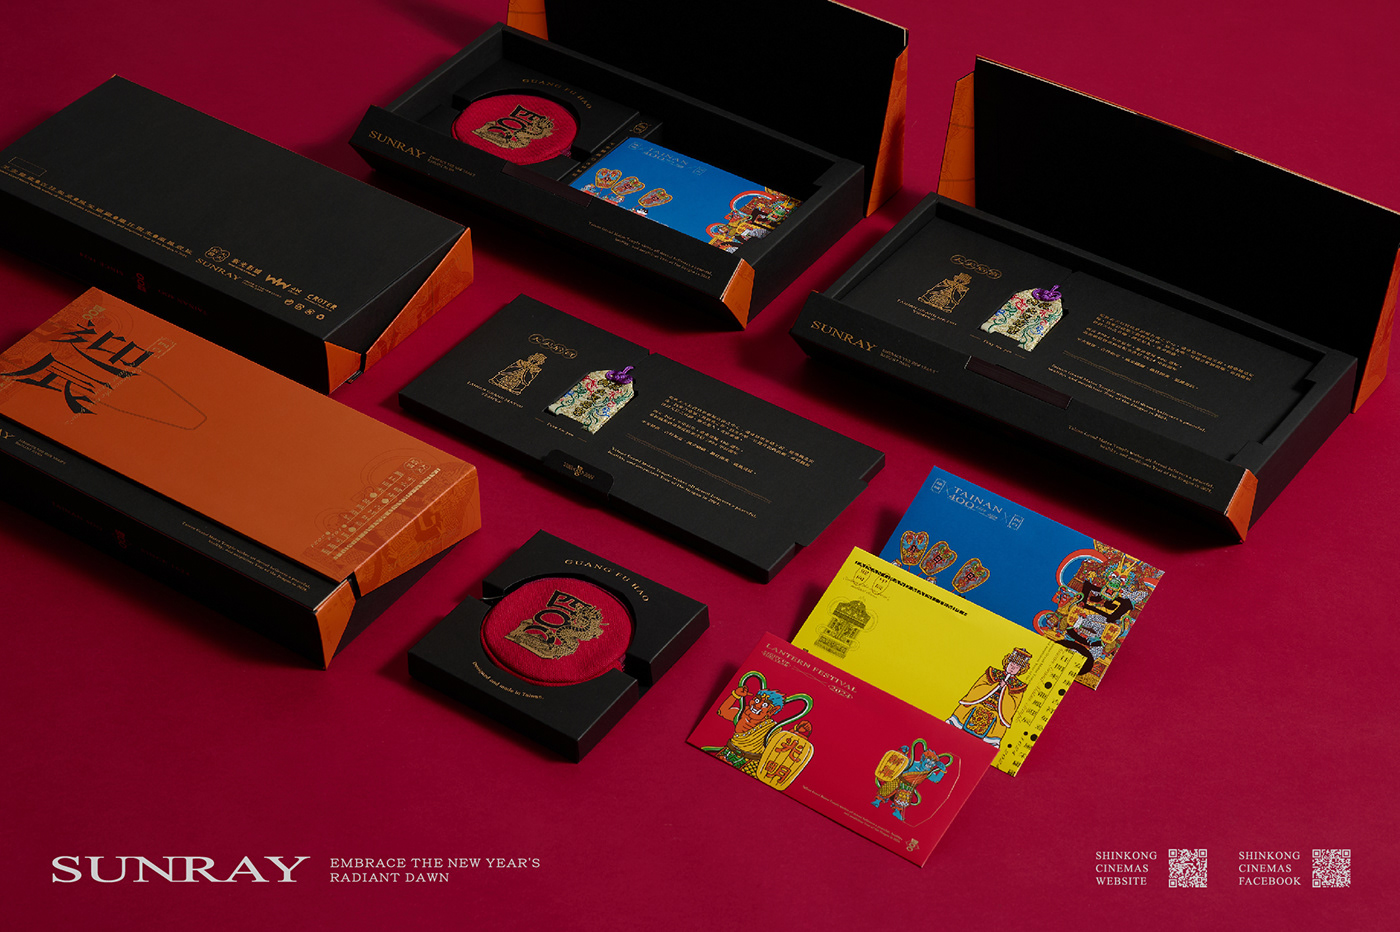 sunray 4W STUDIO Siwei Design artwork packaging design croter new year gift box جافا 먹튀컴증커뮤니티